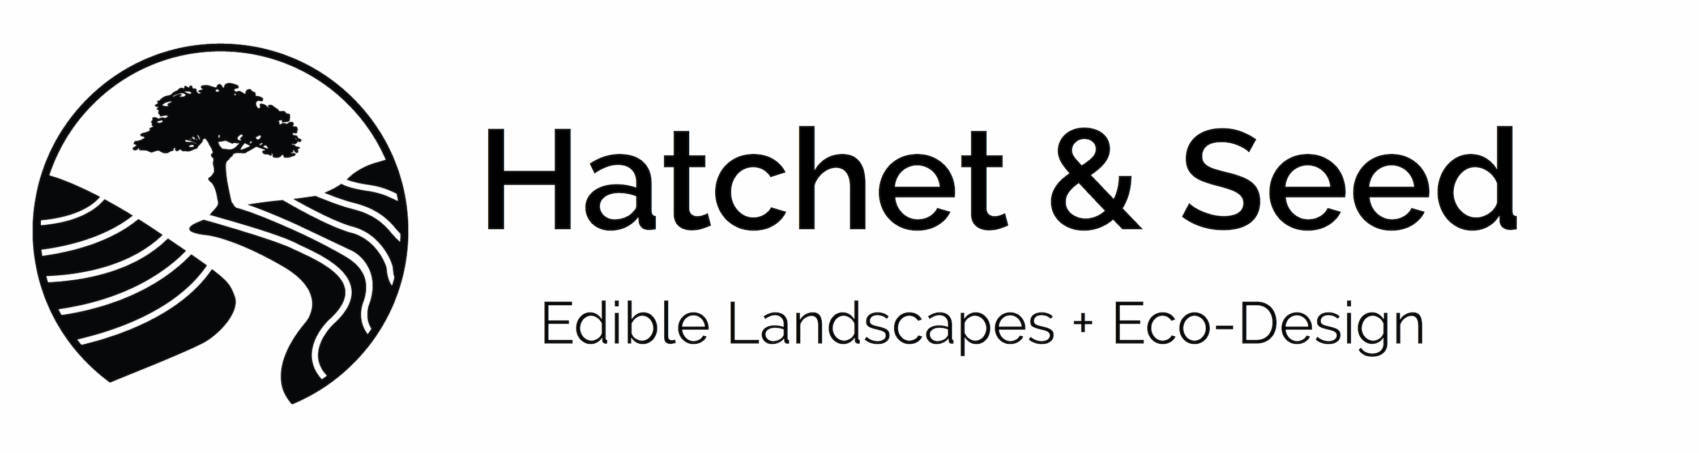 Hatchet & Seed - Edible Landscapes